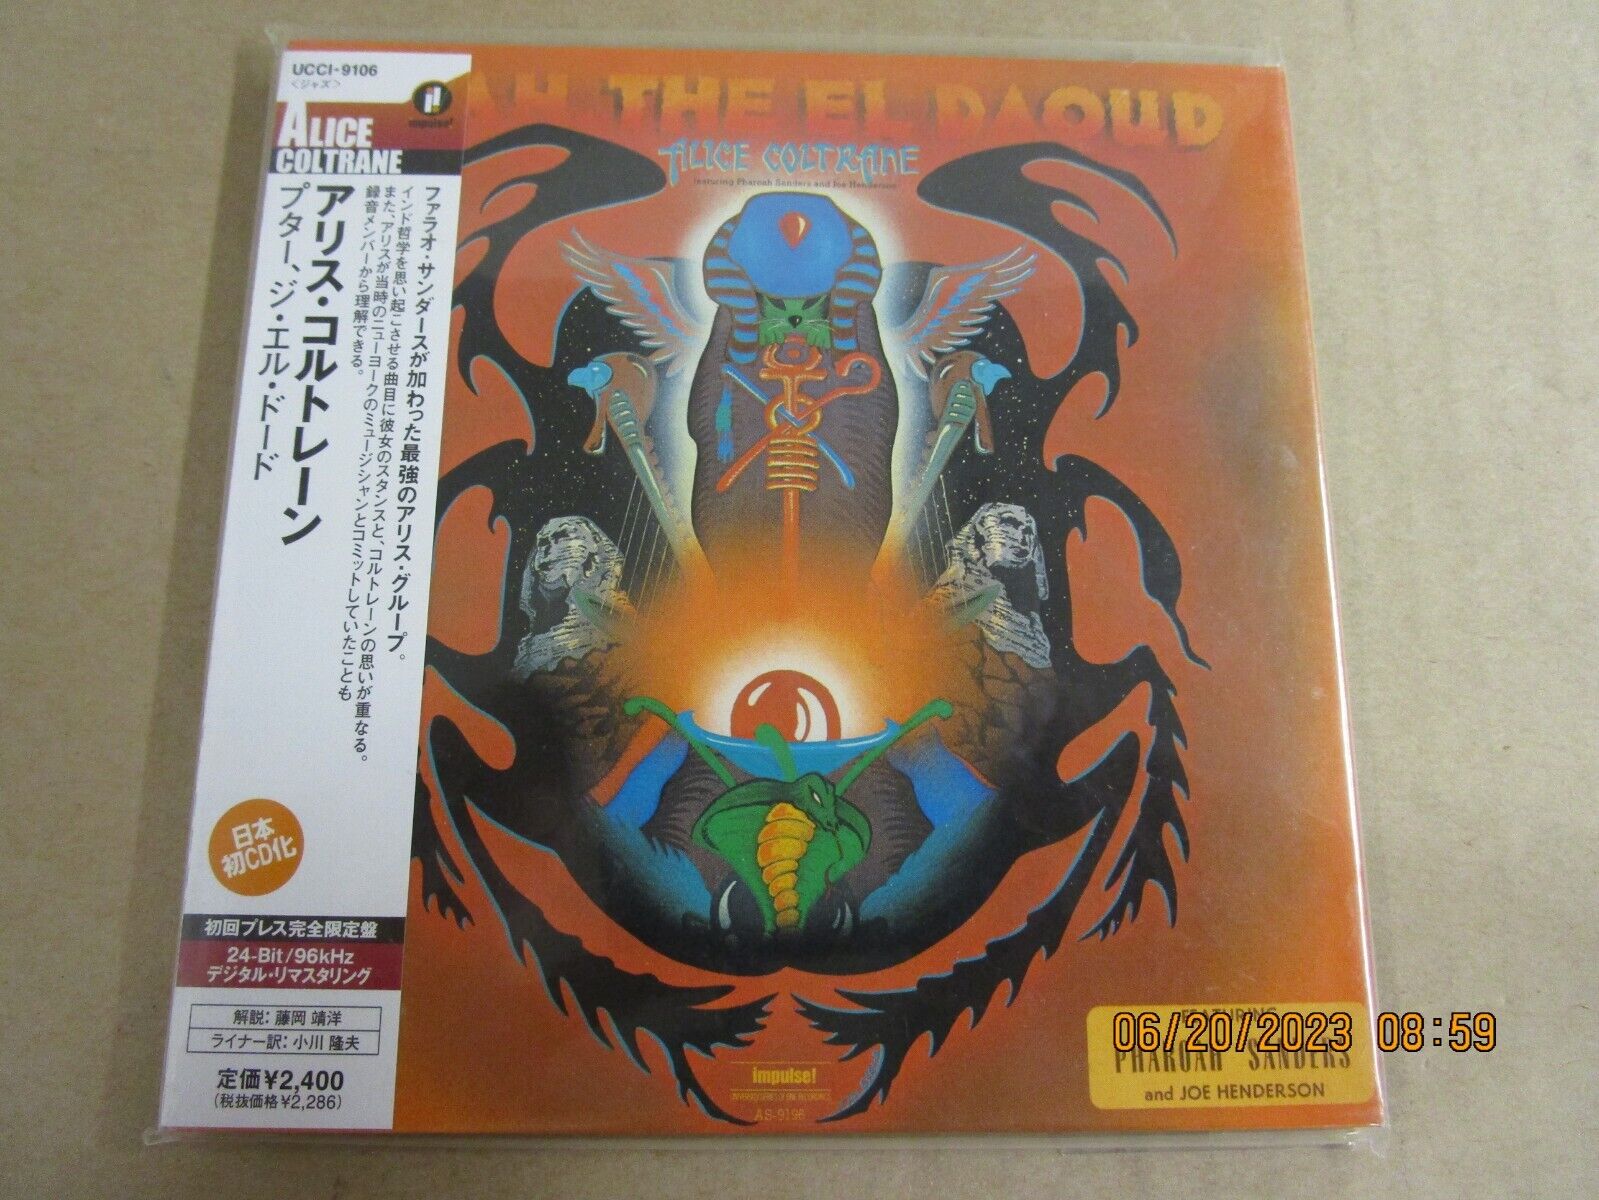 ALICE COLTRANE Ptah, The El Daoud CD Used! Impulse! Japan 2004 Mini LP Sleeve